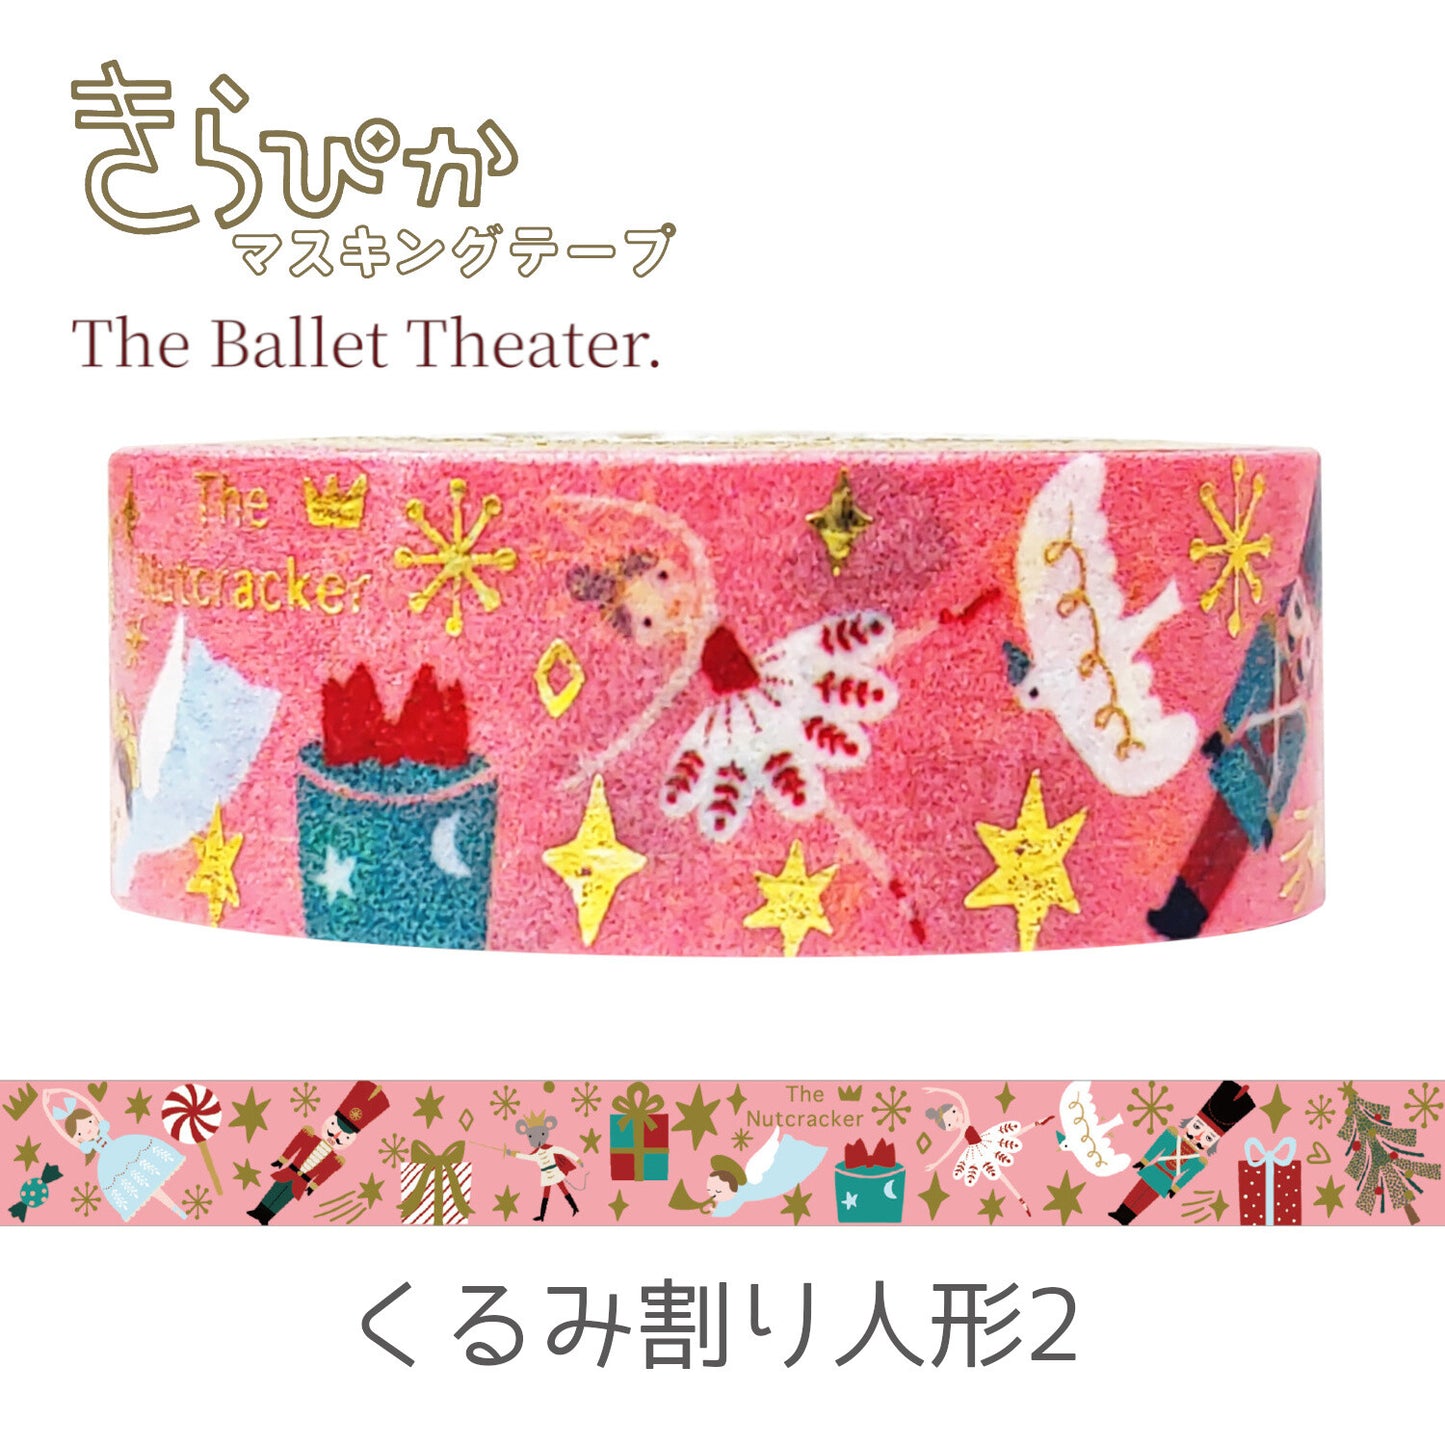 Nutcracker Ballet Glitter Japanese Washi Tape Masking Tape Shinzi Katoh Design